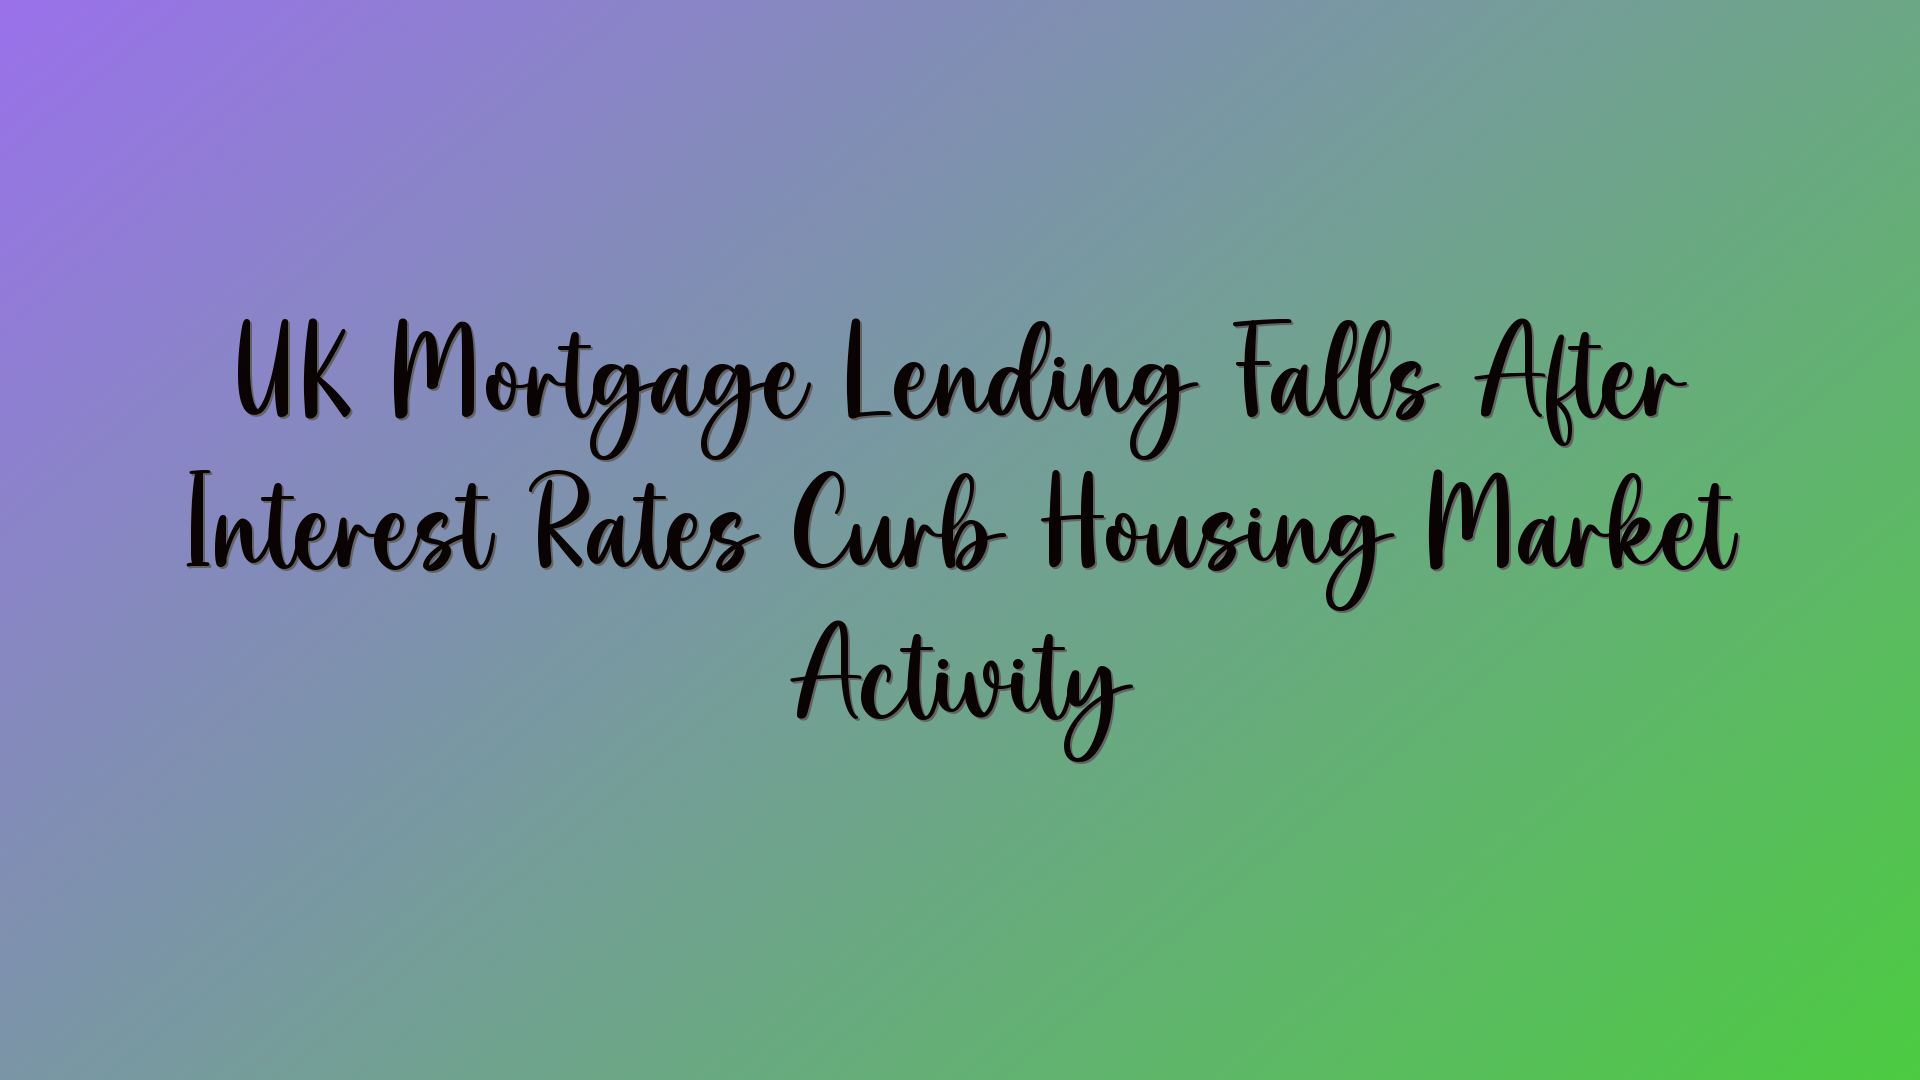 UK Mortgage Lending Falls After Interest Rates Curb Housing Market Activity